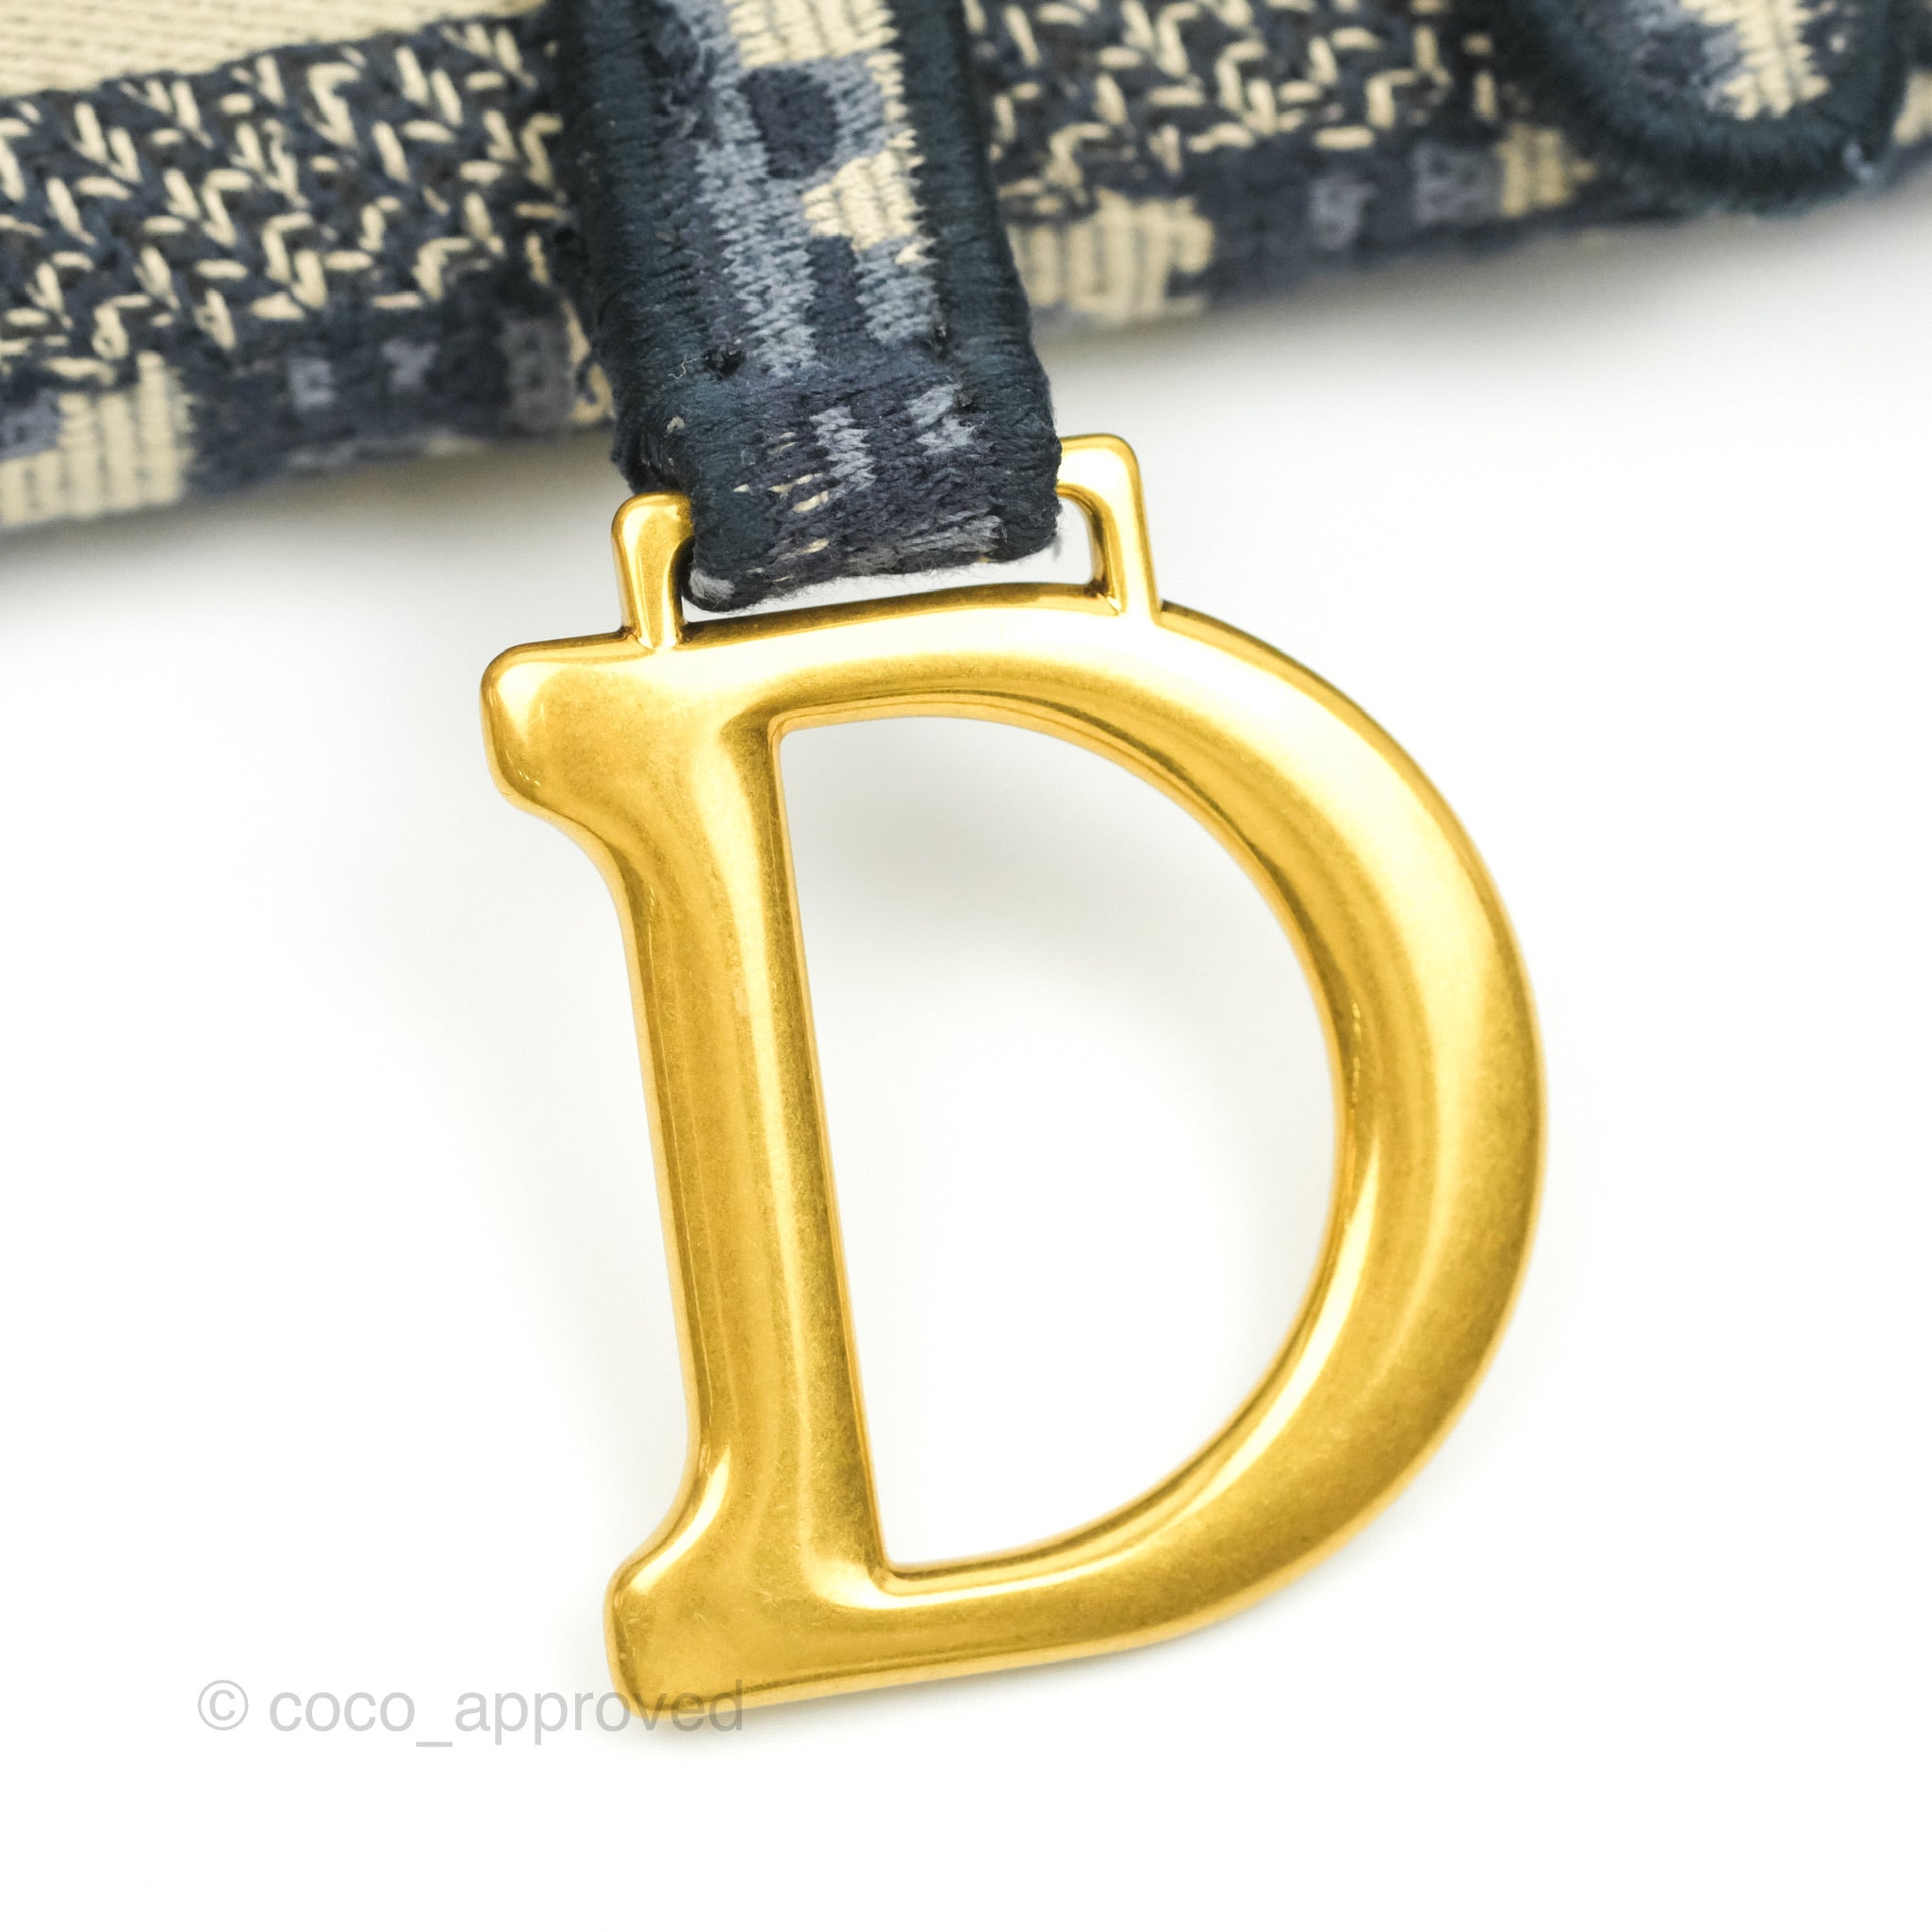 SILI Preorder - New Dior slim pochette saddle in navy